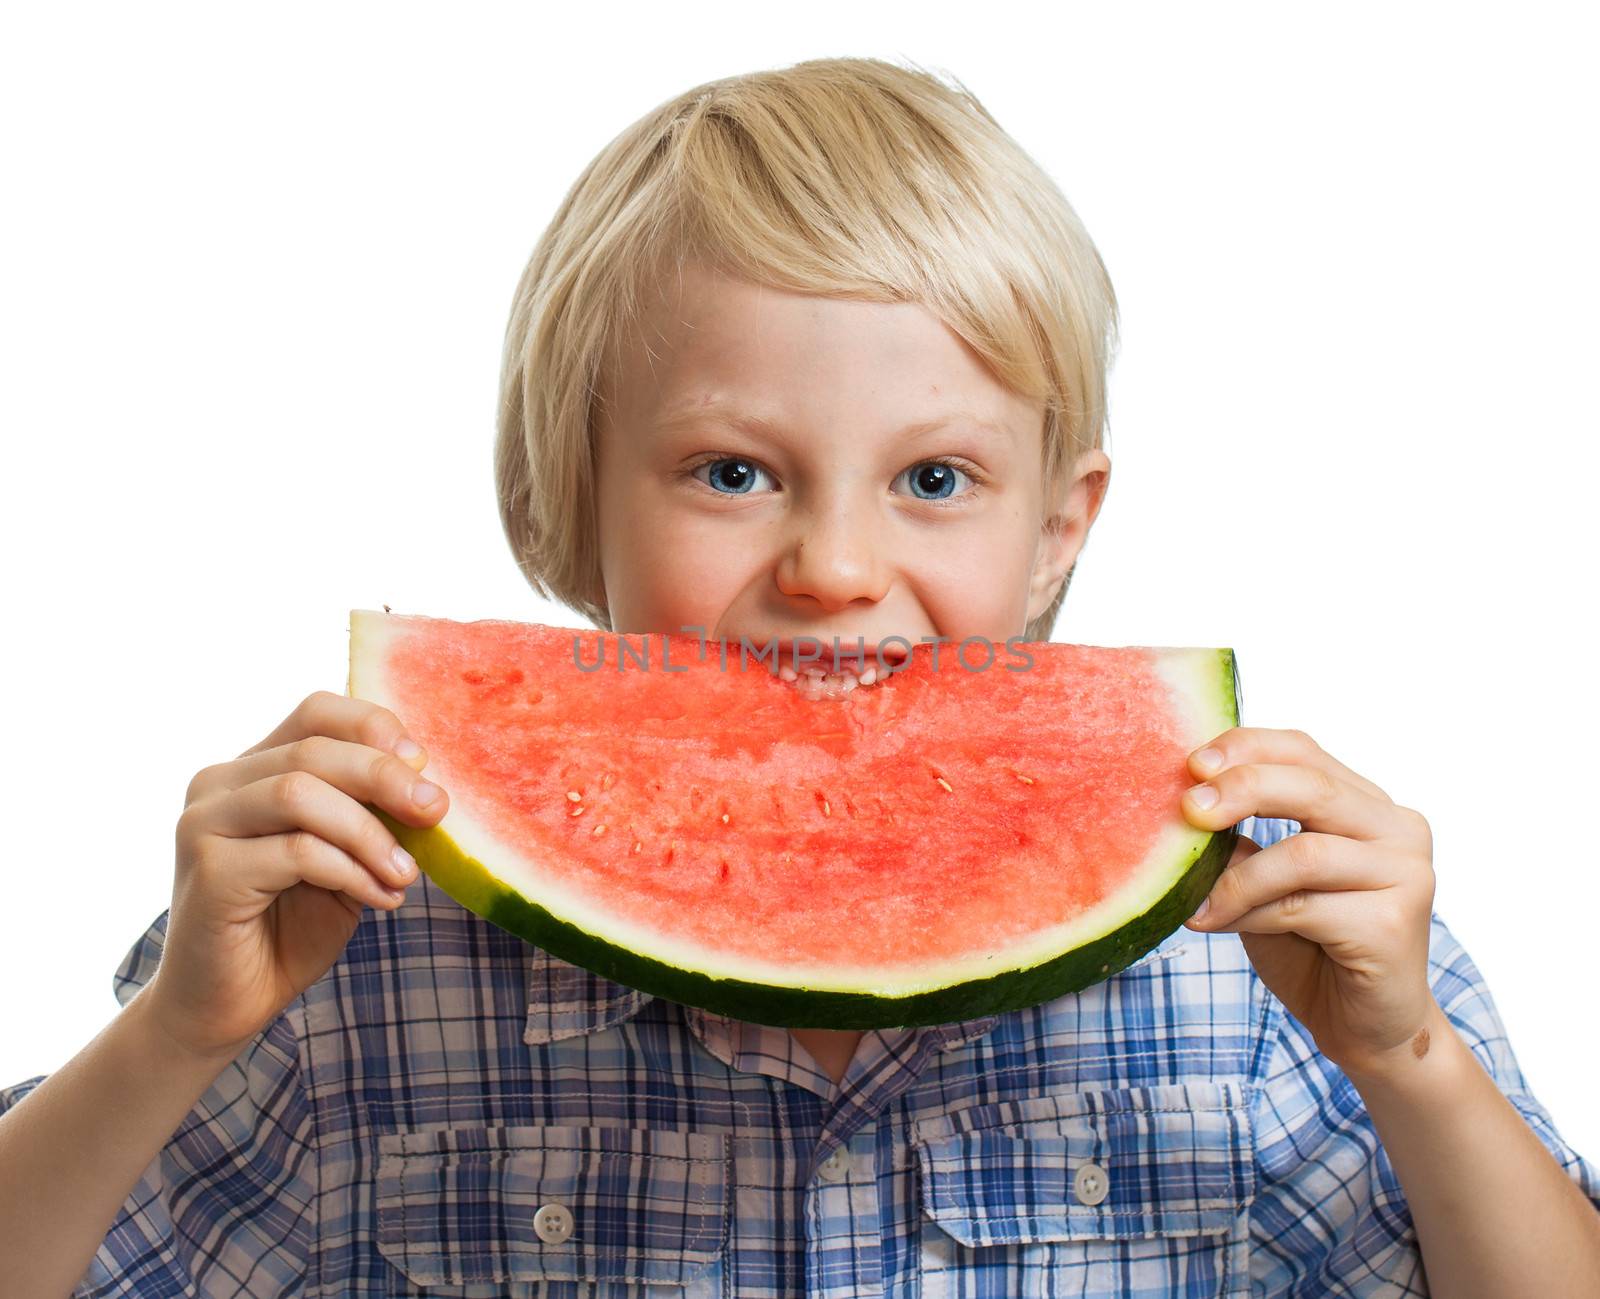 Young boy taking bite of water melon by Jaykayl